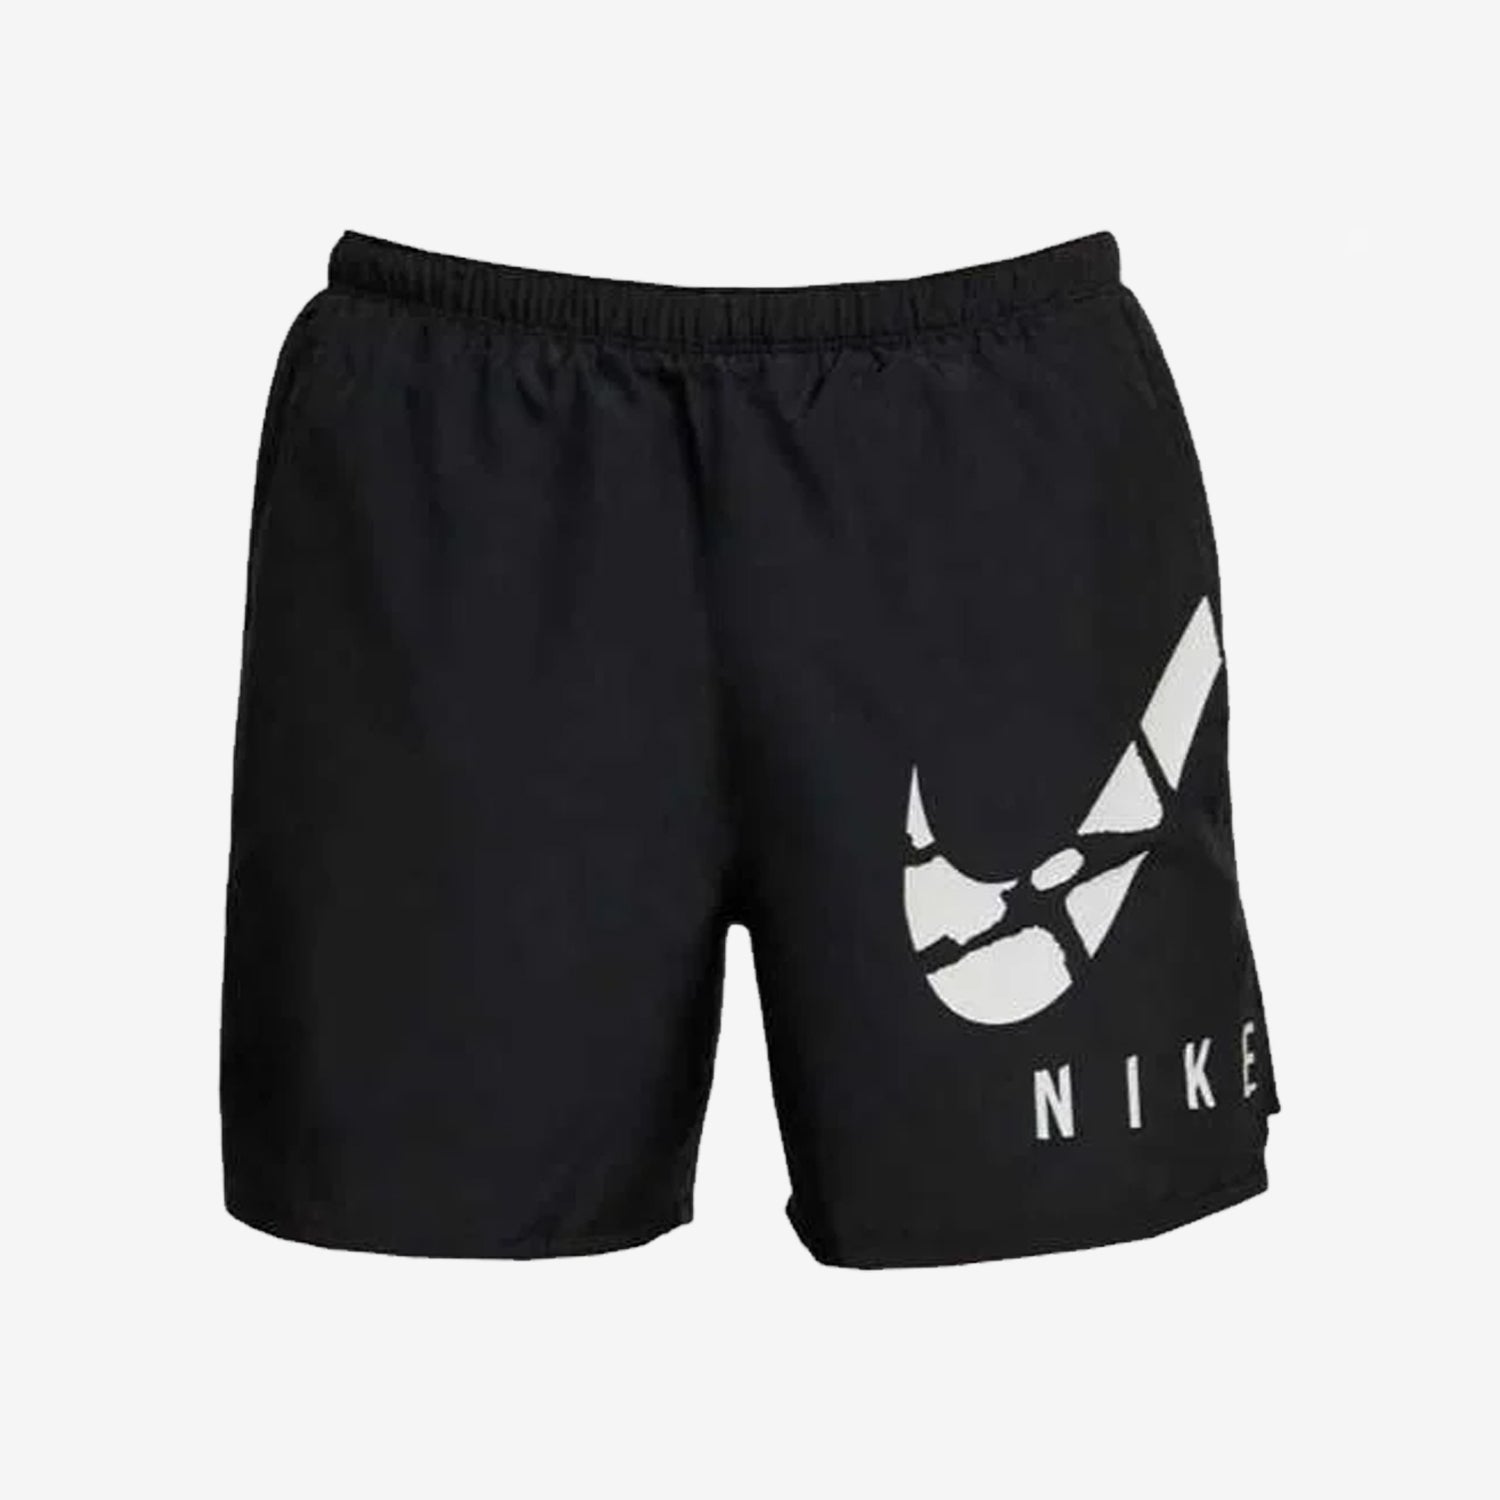 Nike Challenger 13cm Shorts - Black / Reflective